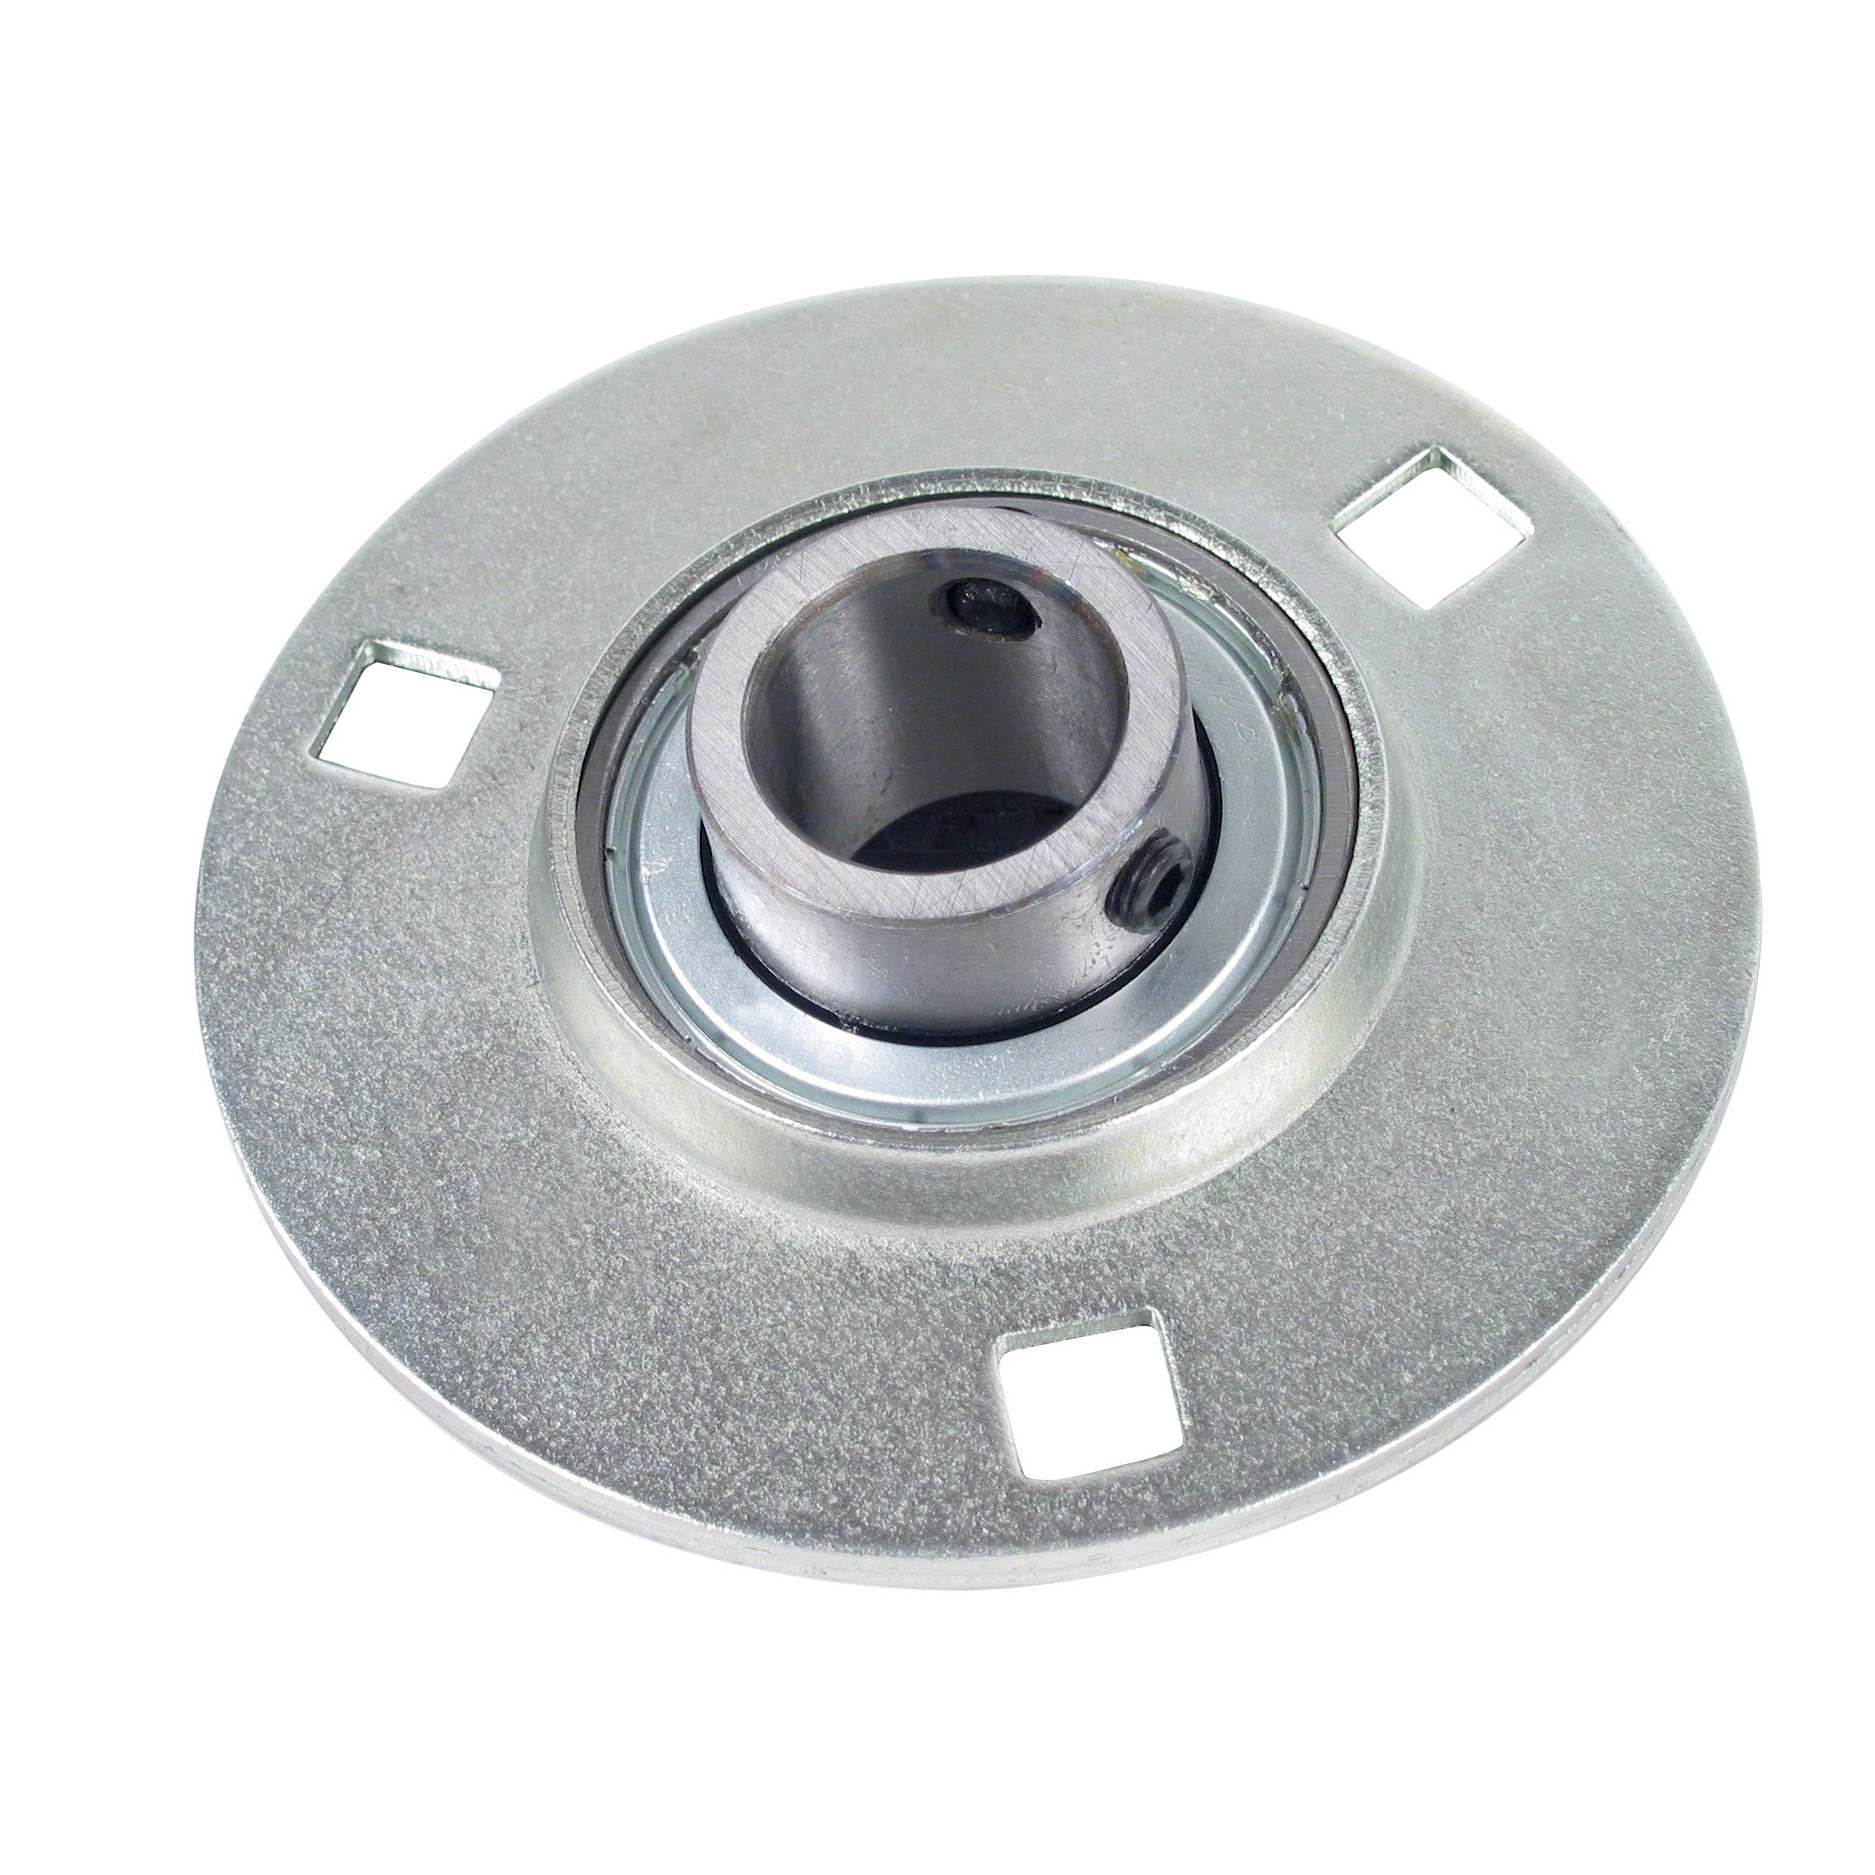 Sheet steel flanged bearing for light loads - Sheet steel - 3 fixing holes - Light